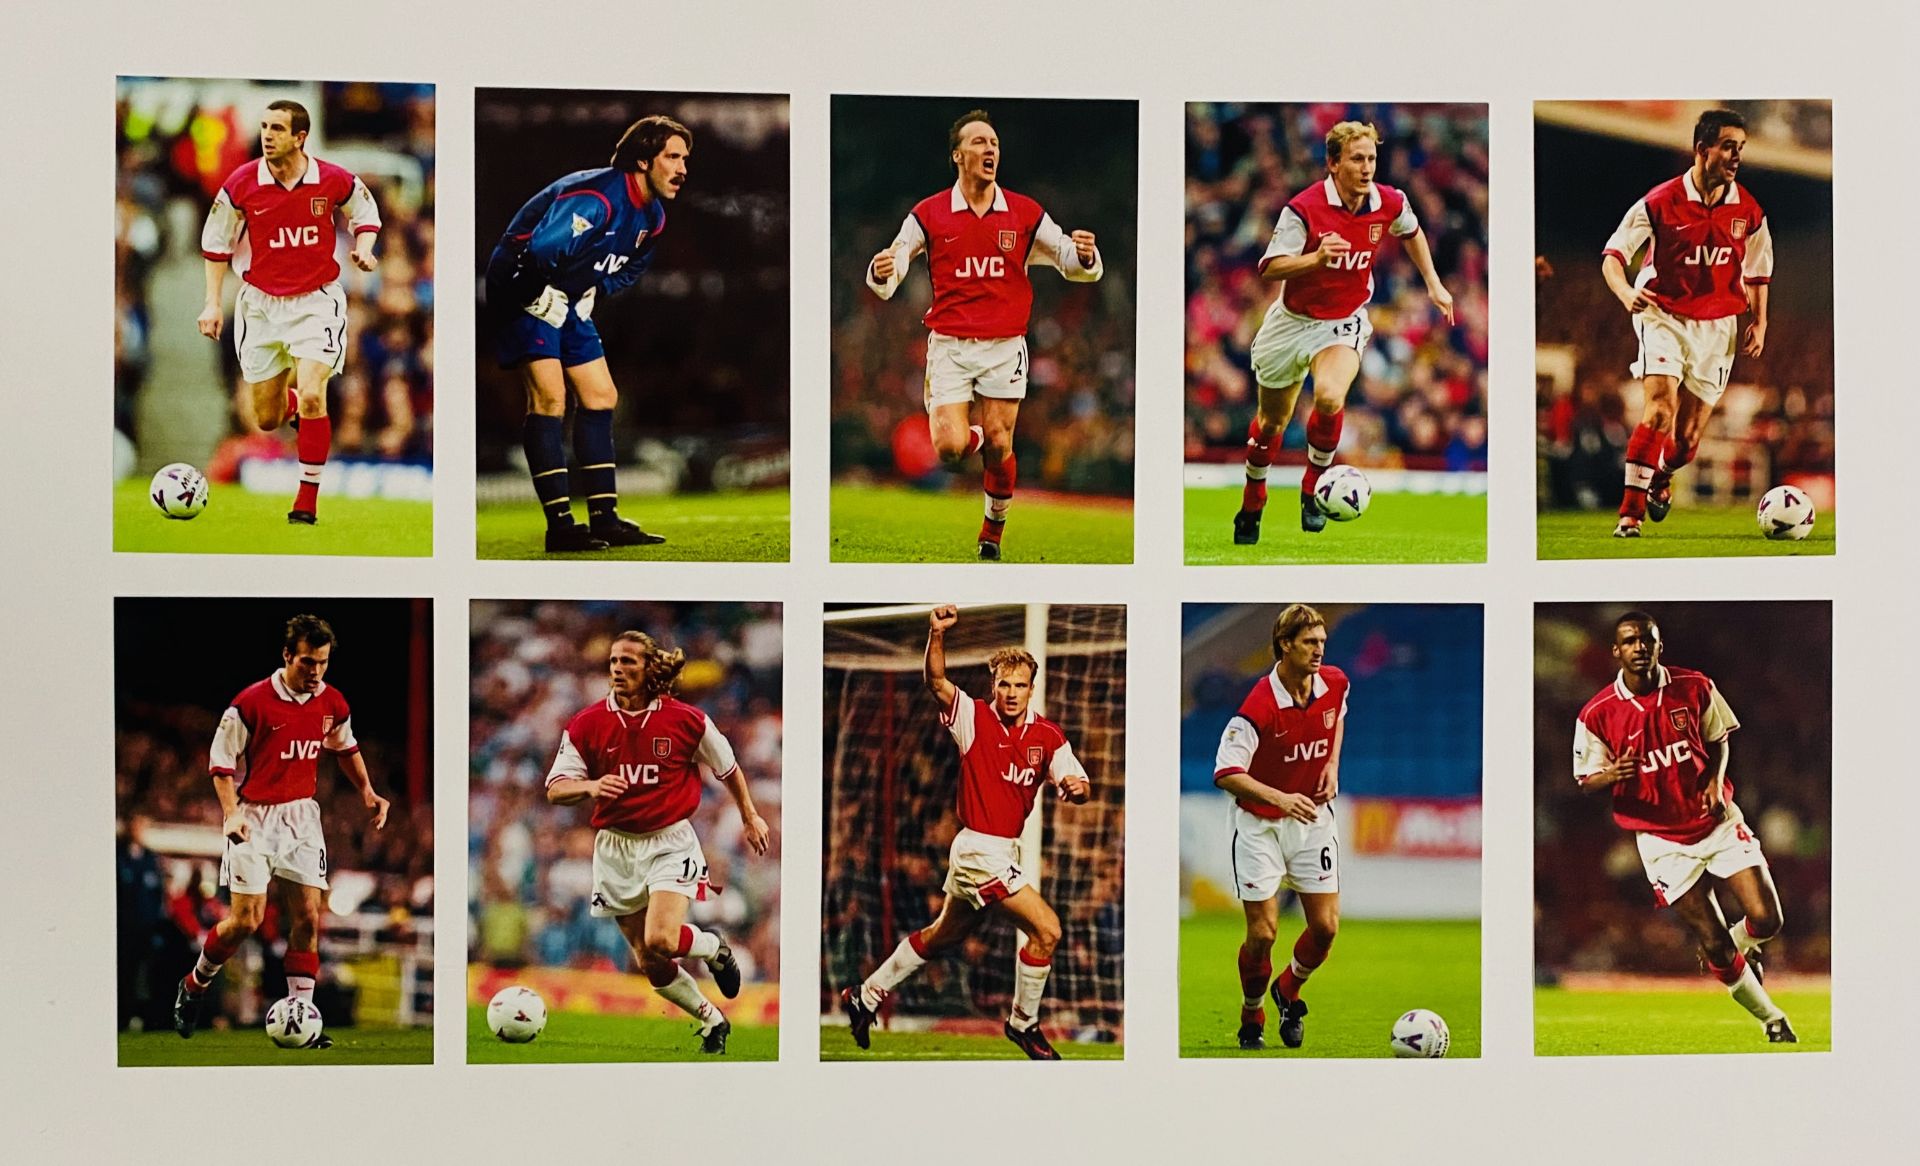 Arsenal 1998/99 squad signed jersey - Image 2 of 2